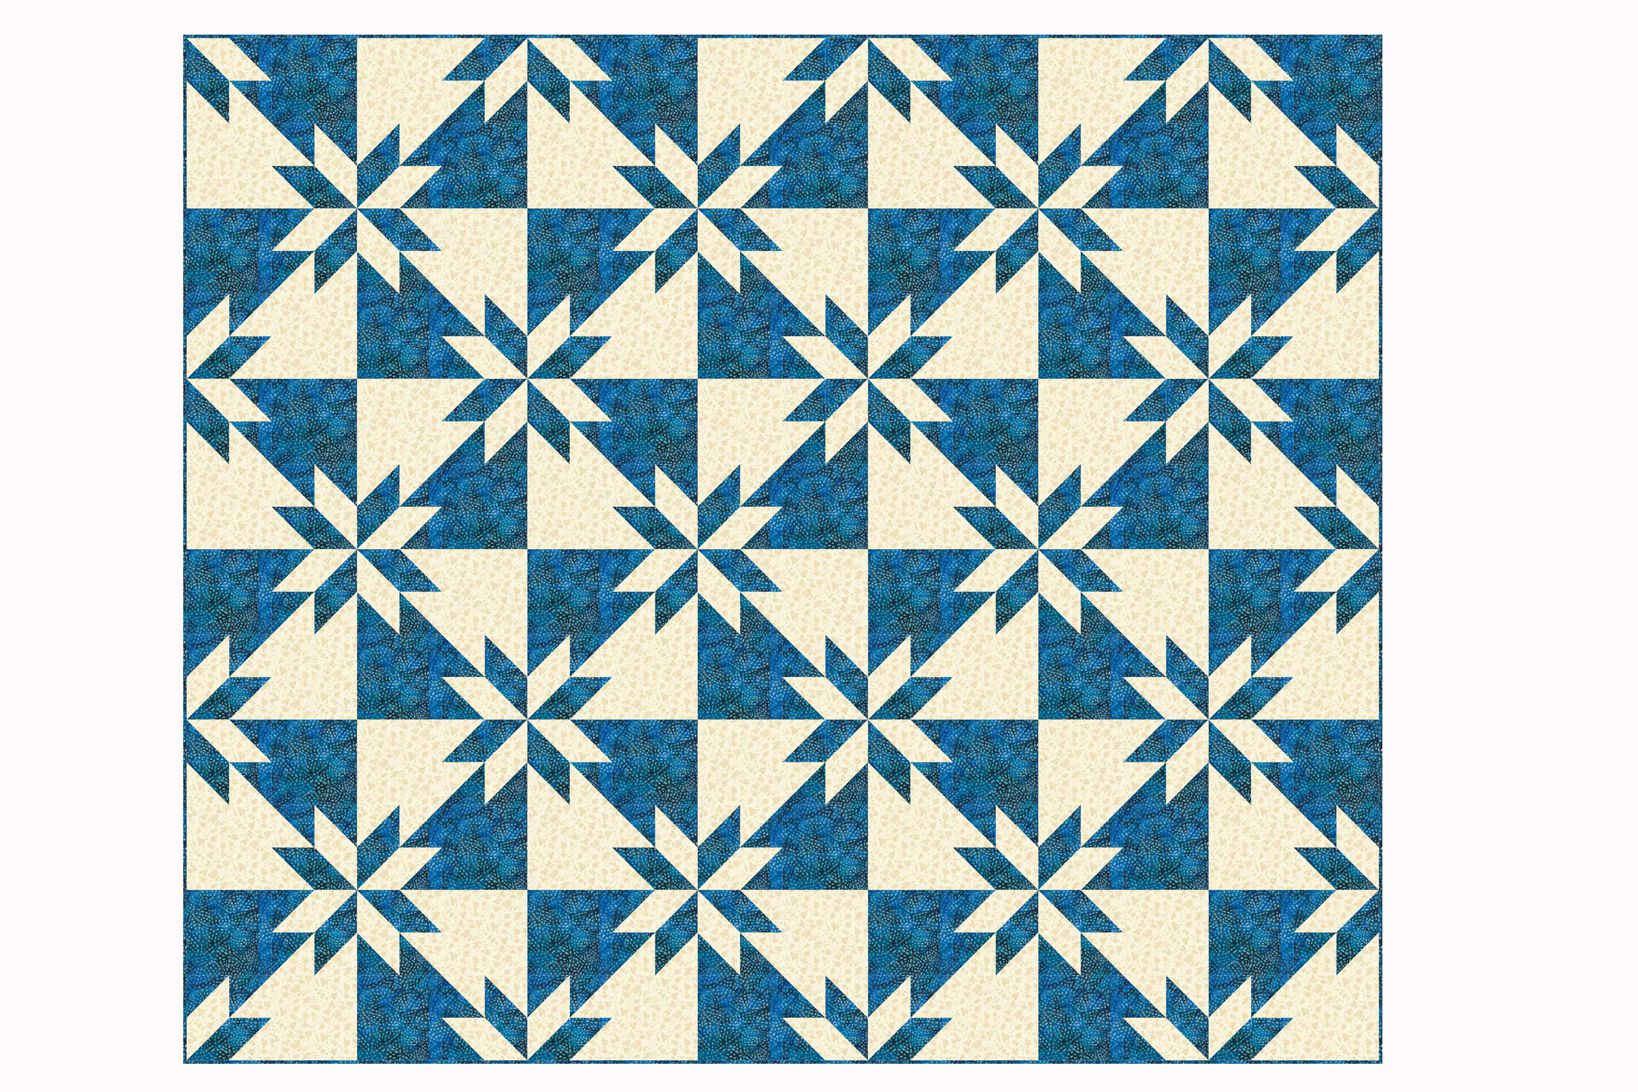 a-quilt-blog-house-quilt-patterns-house-quilt-block-patchwork-quilt